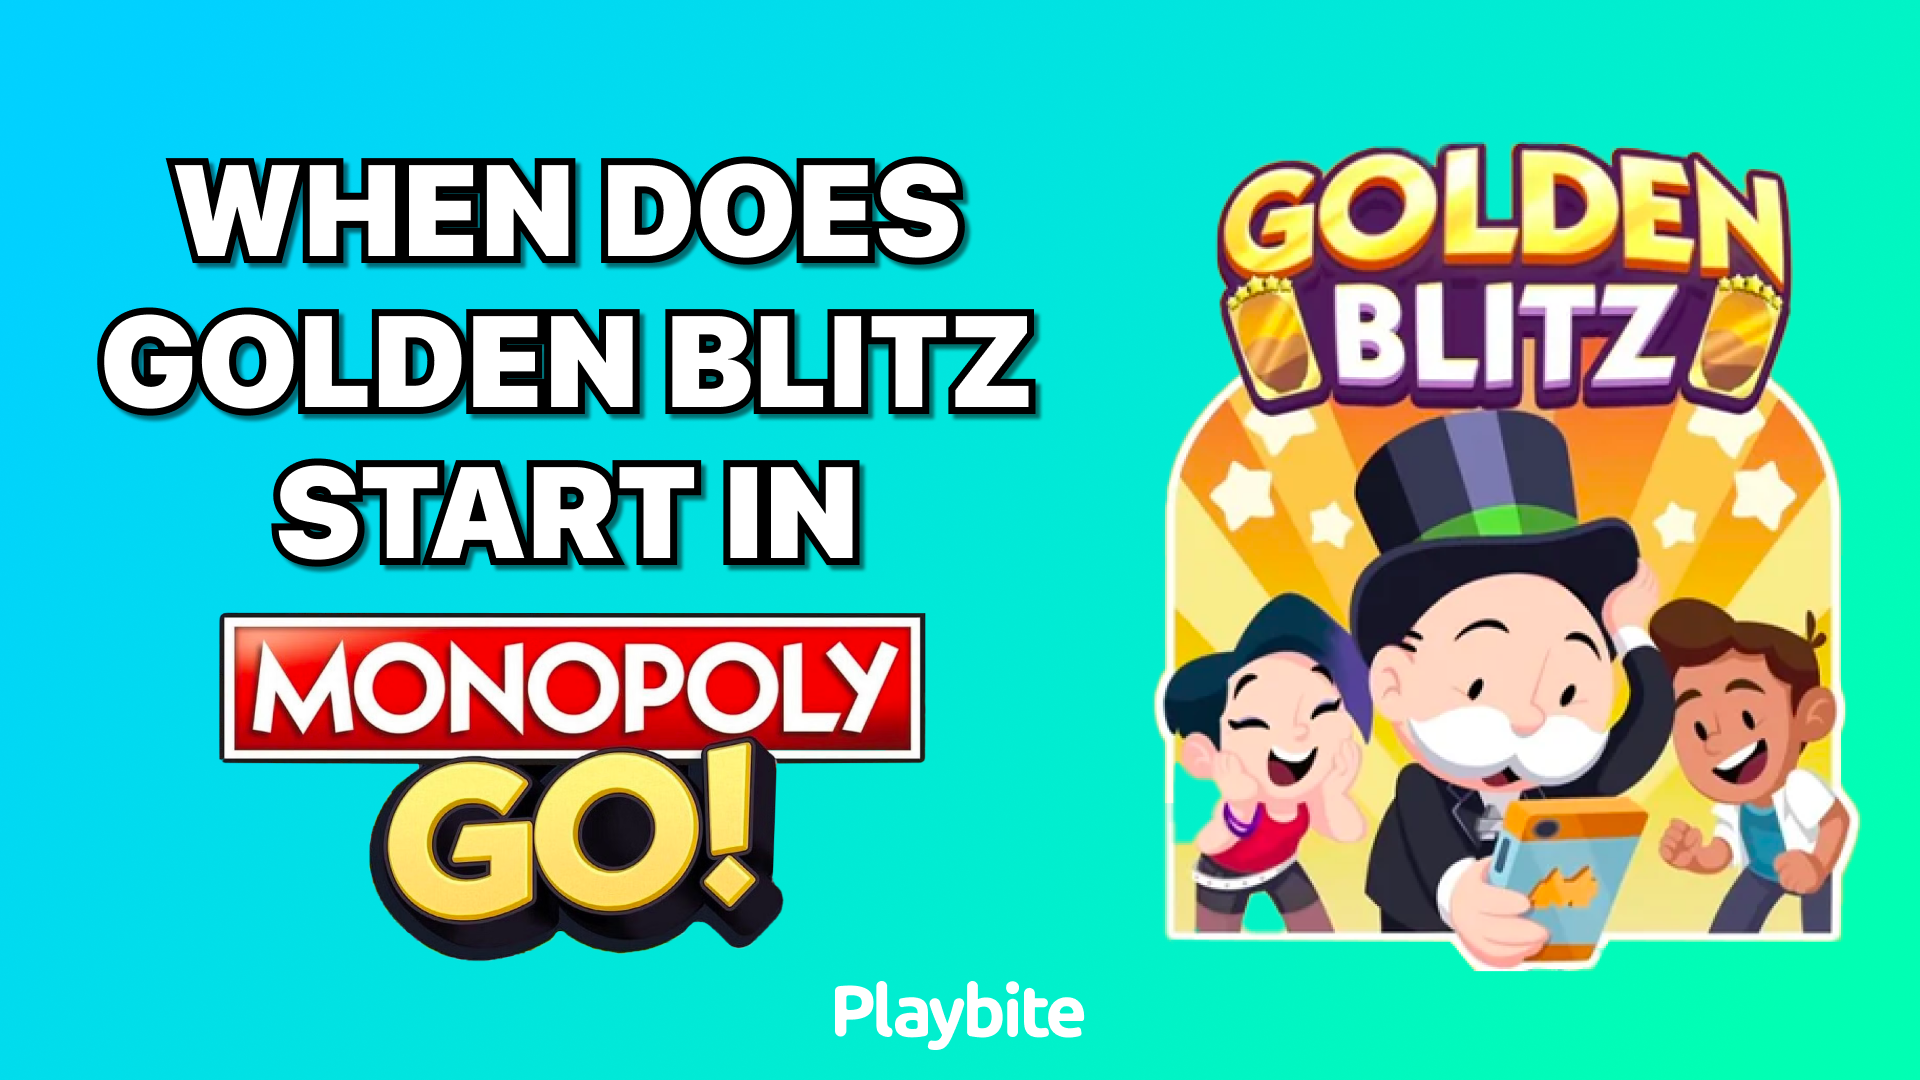 When Does Golden Blitz Start in Monopoly Go?